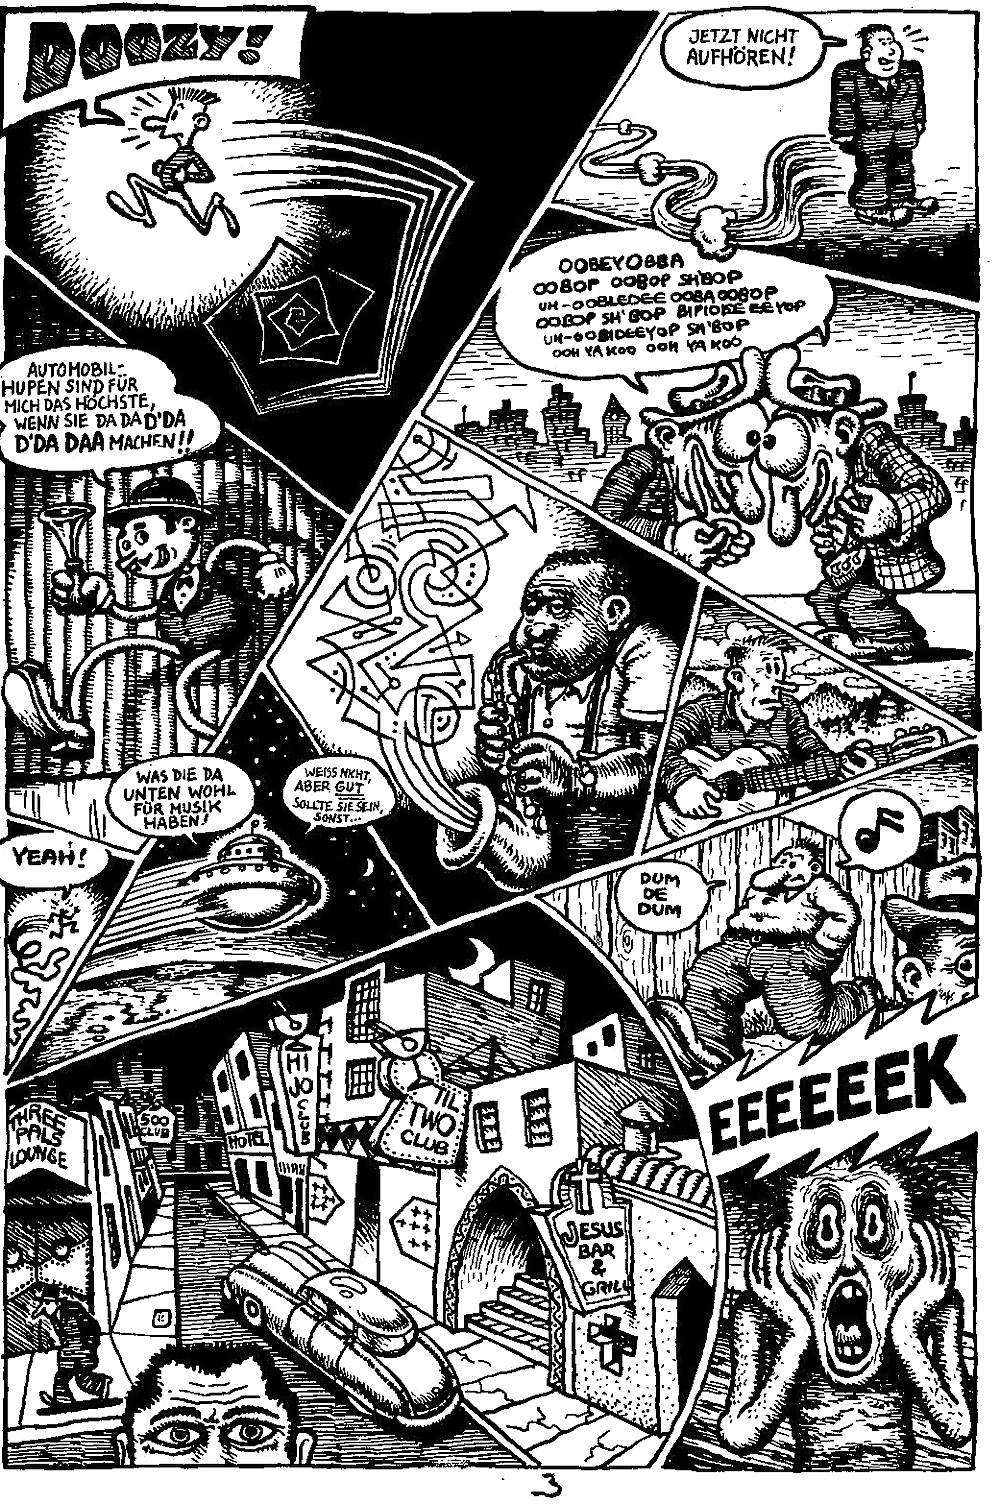 Crumb kubistic comic by jedman #14463106